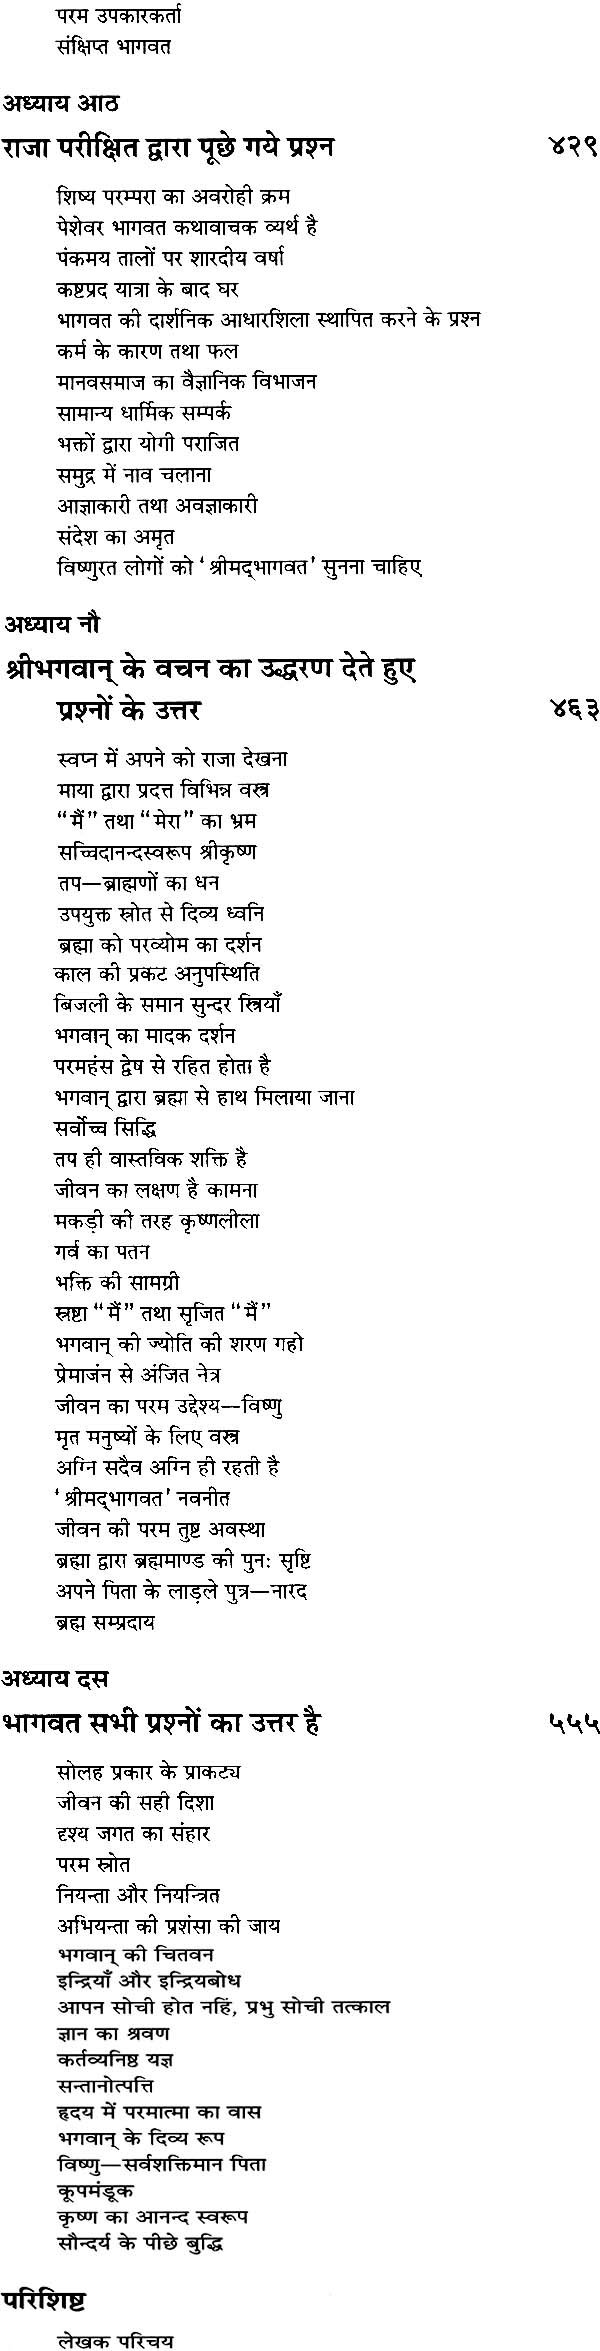 Shershaah's Ranjha song re-written for Kiara Advani-Sidharth Malhotra's  wedding; Check the swoon-worthy lyrics | PINKVILLA